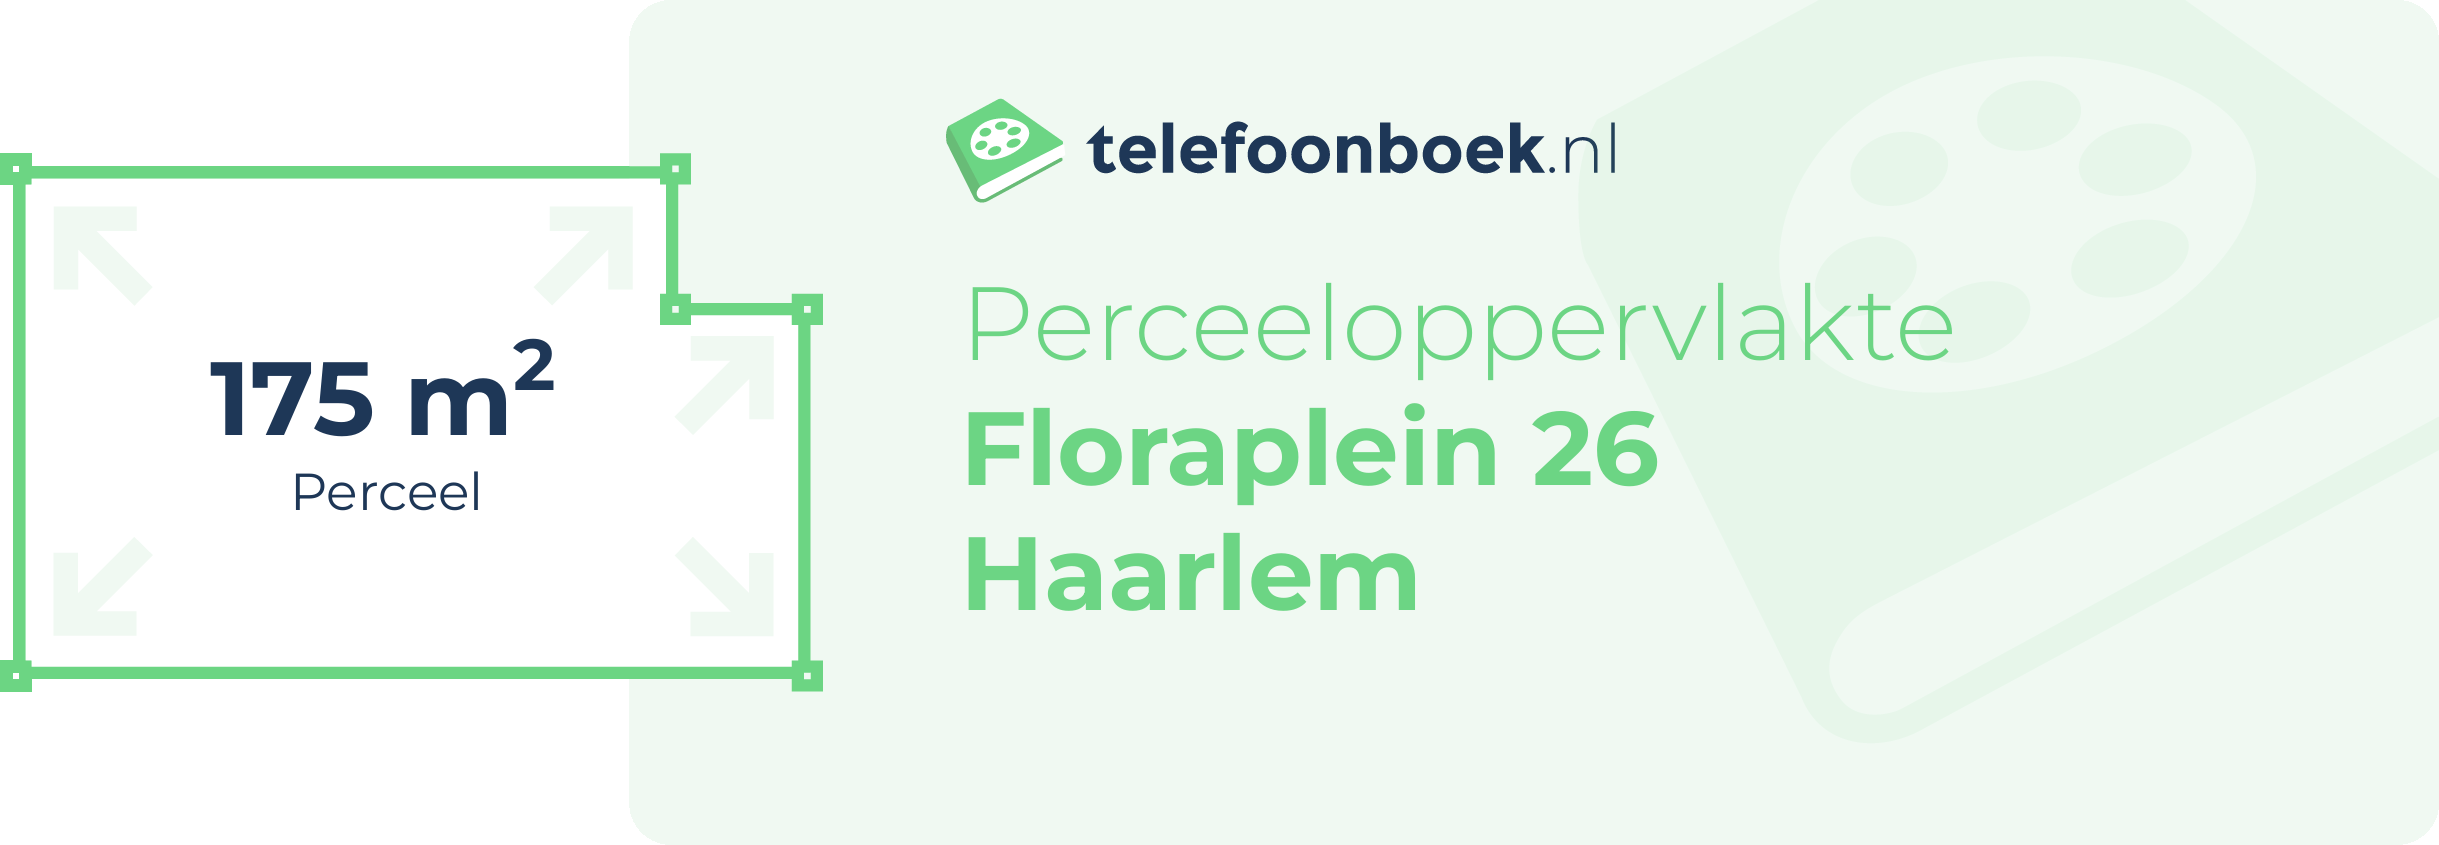 Perceeloppervlakte Floraplein 26 Haarlem